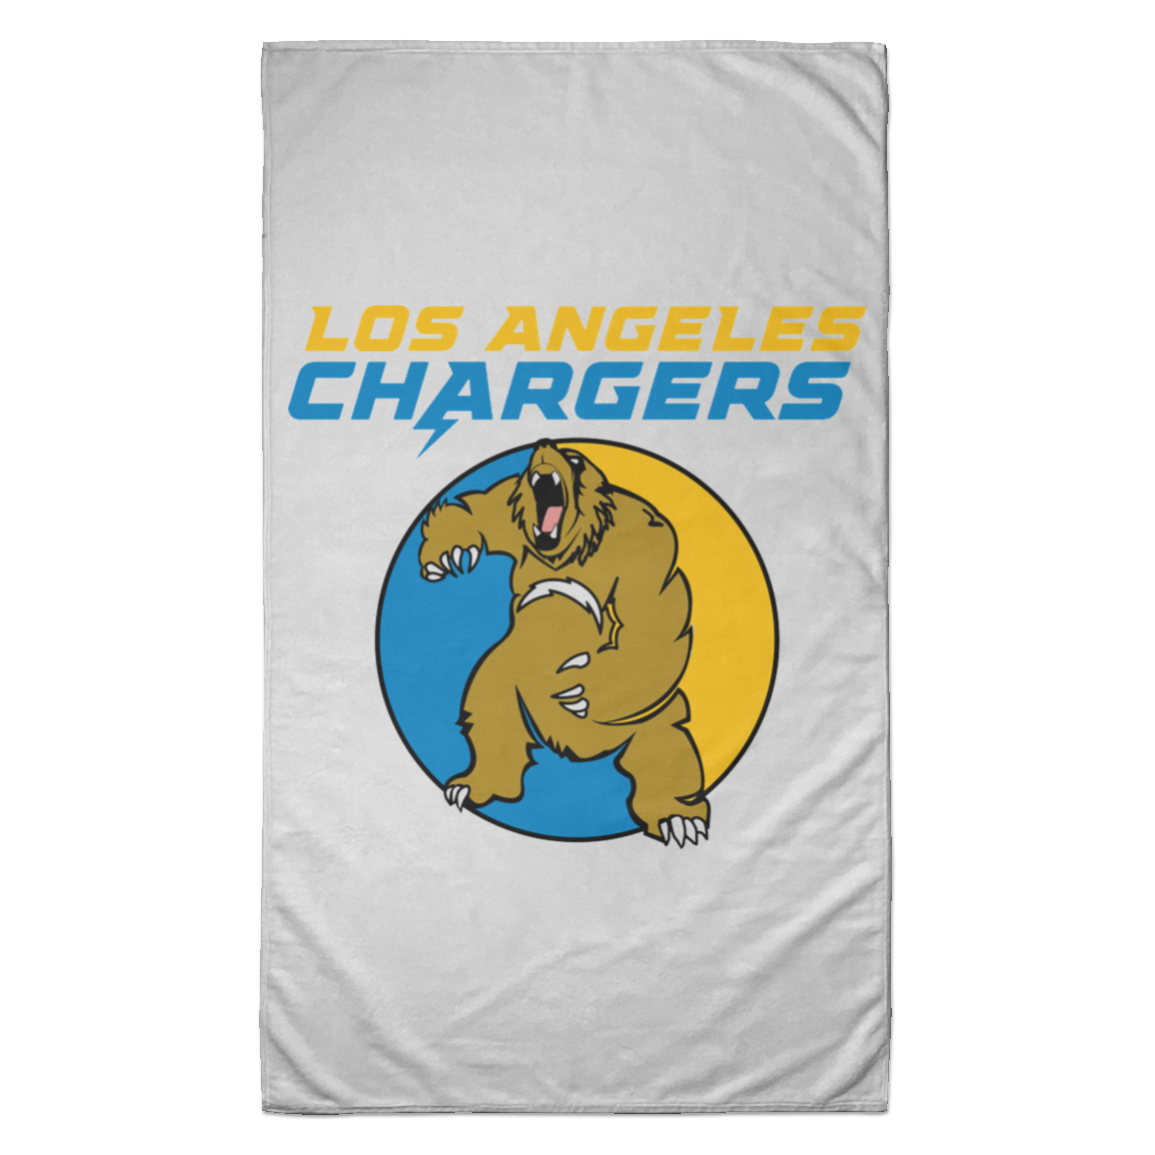 ArtichokeUSA Custom Design. Los Angeles Chargers Fan Art. Towel - 35x60